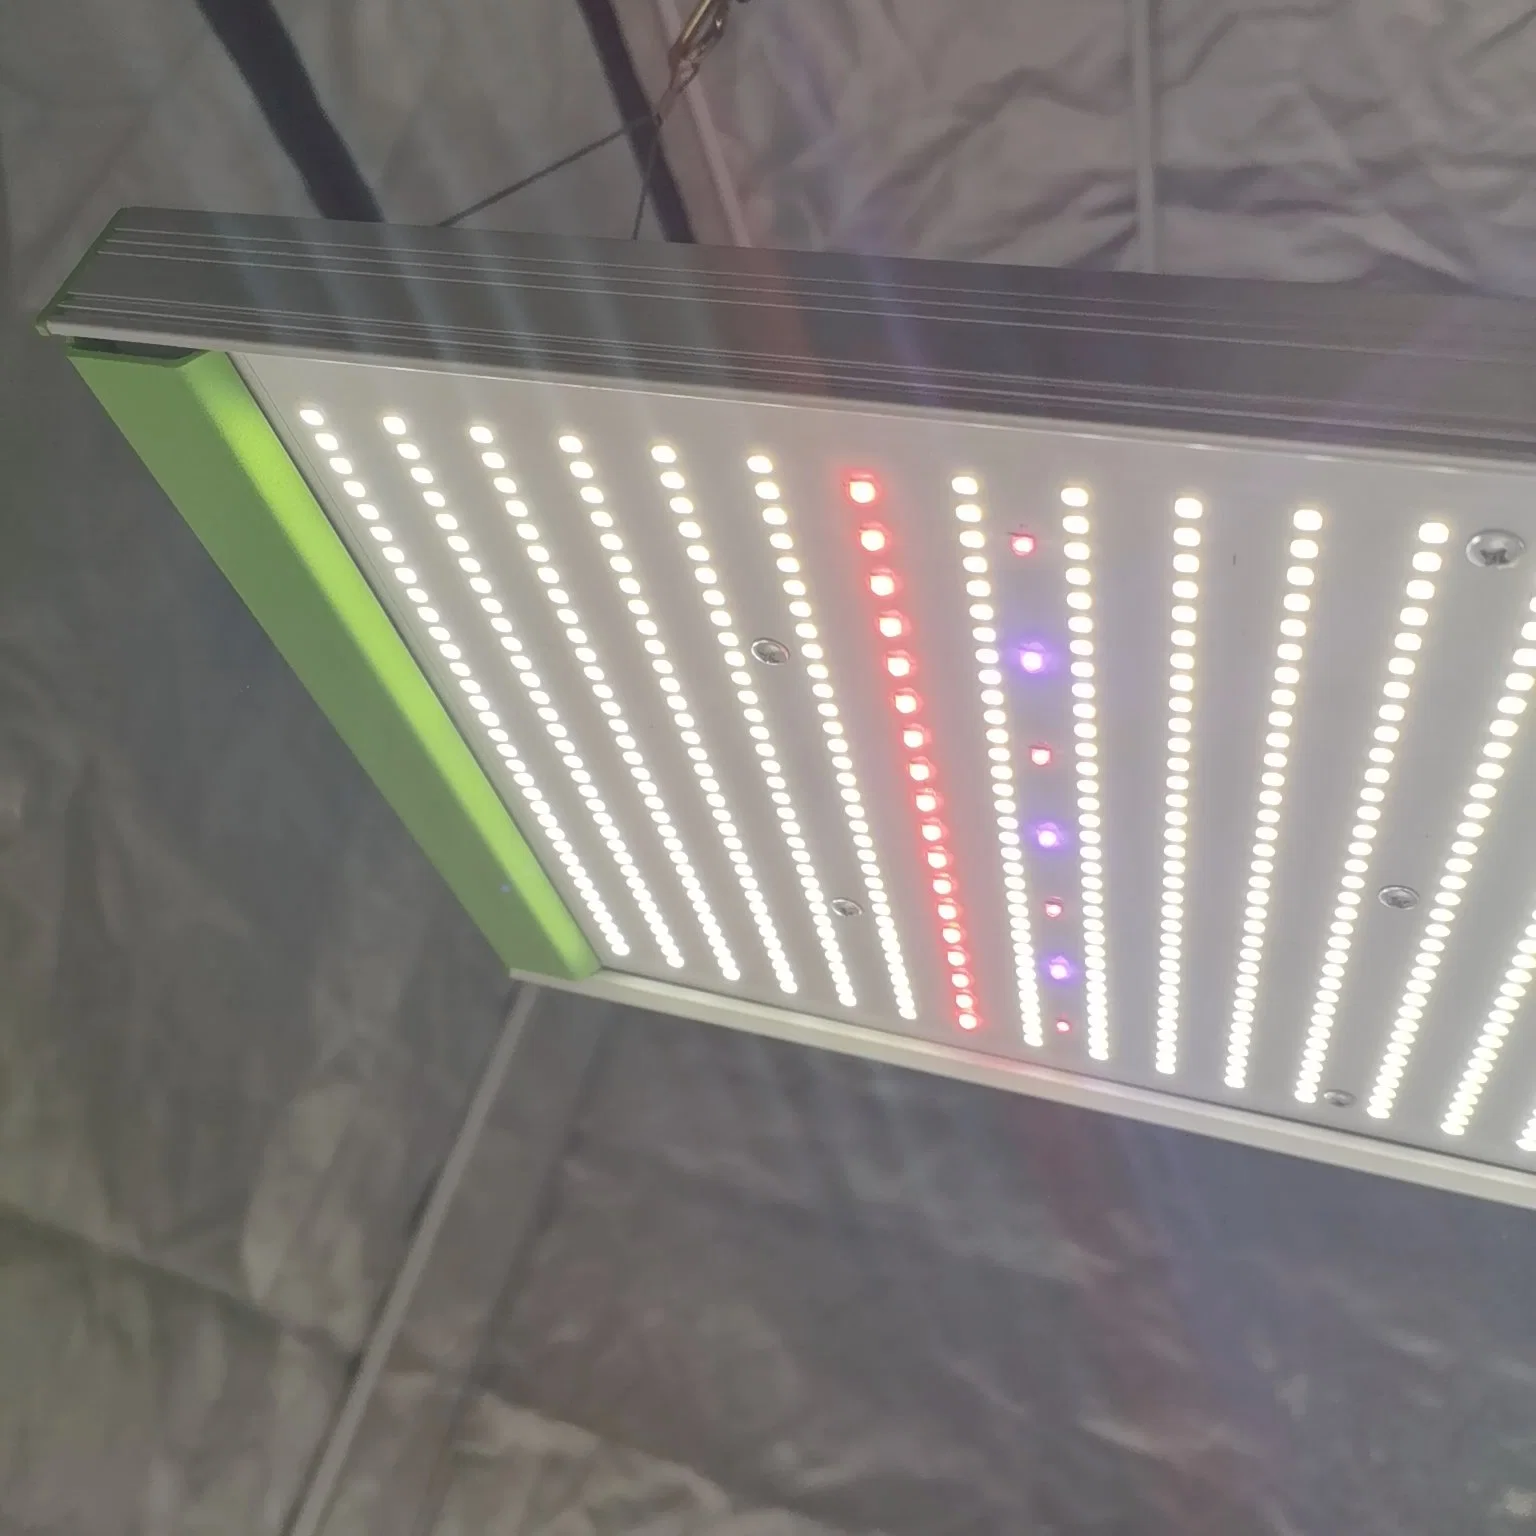 Ilummini 320W Horticultura LED crecer la luz con espectro completo para Plantas de interior